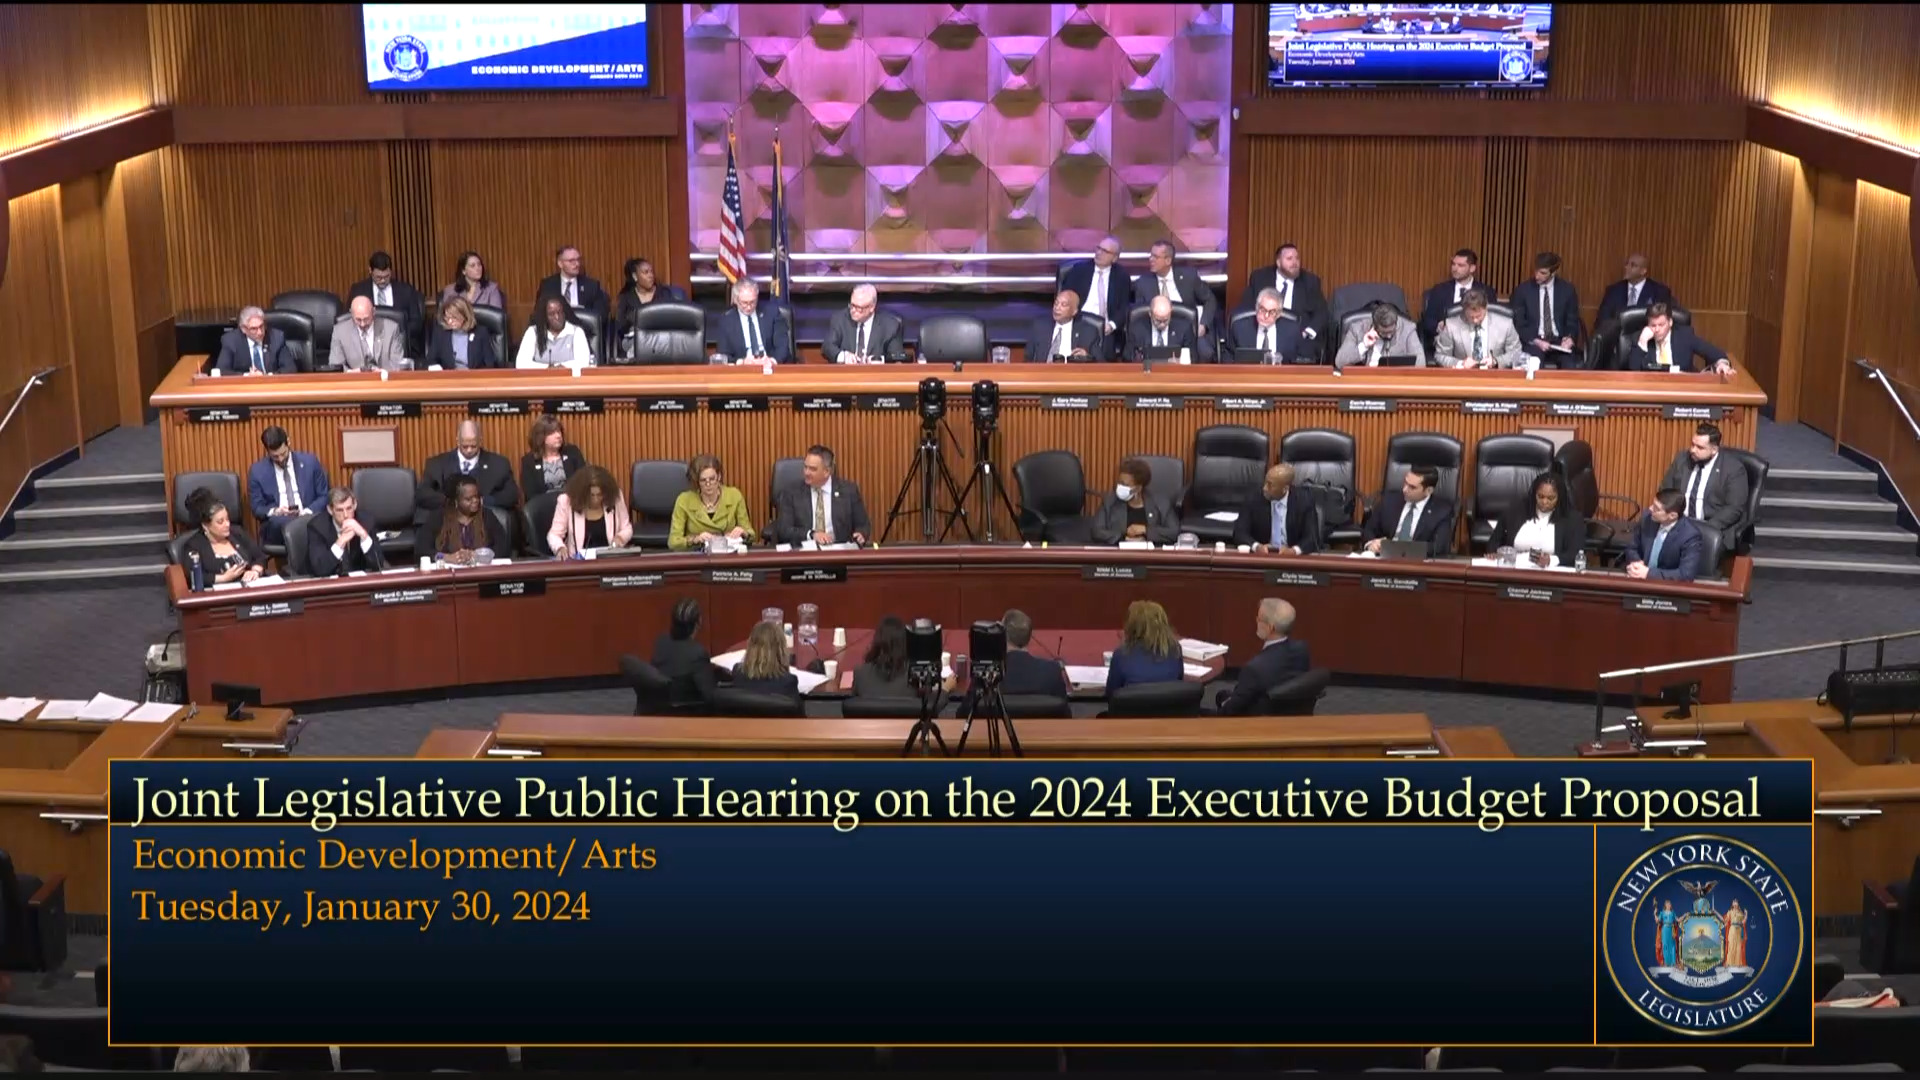 NYS Department of Economic Development Commissioner Testifies During Budget Hearing on Economic Development